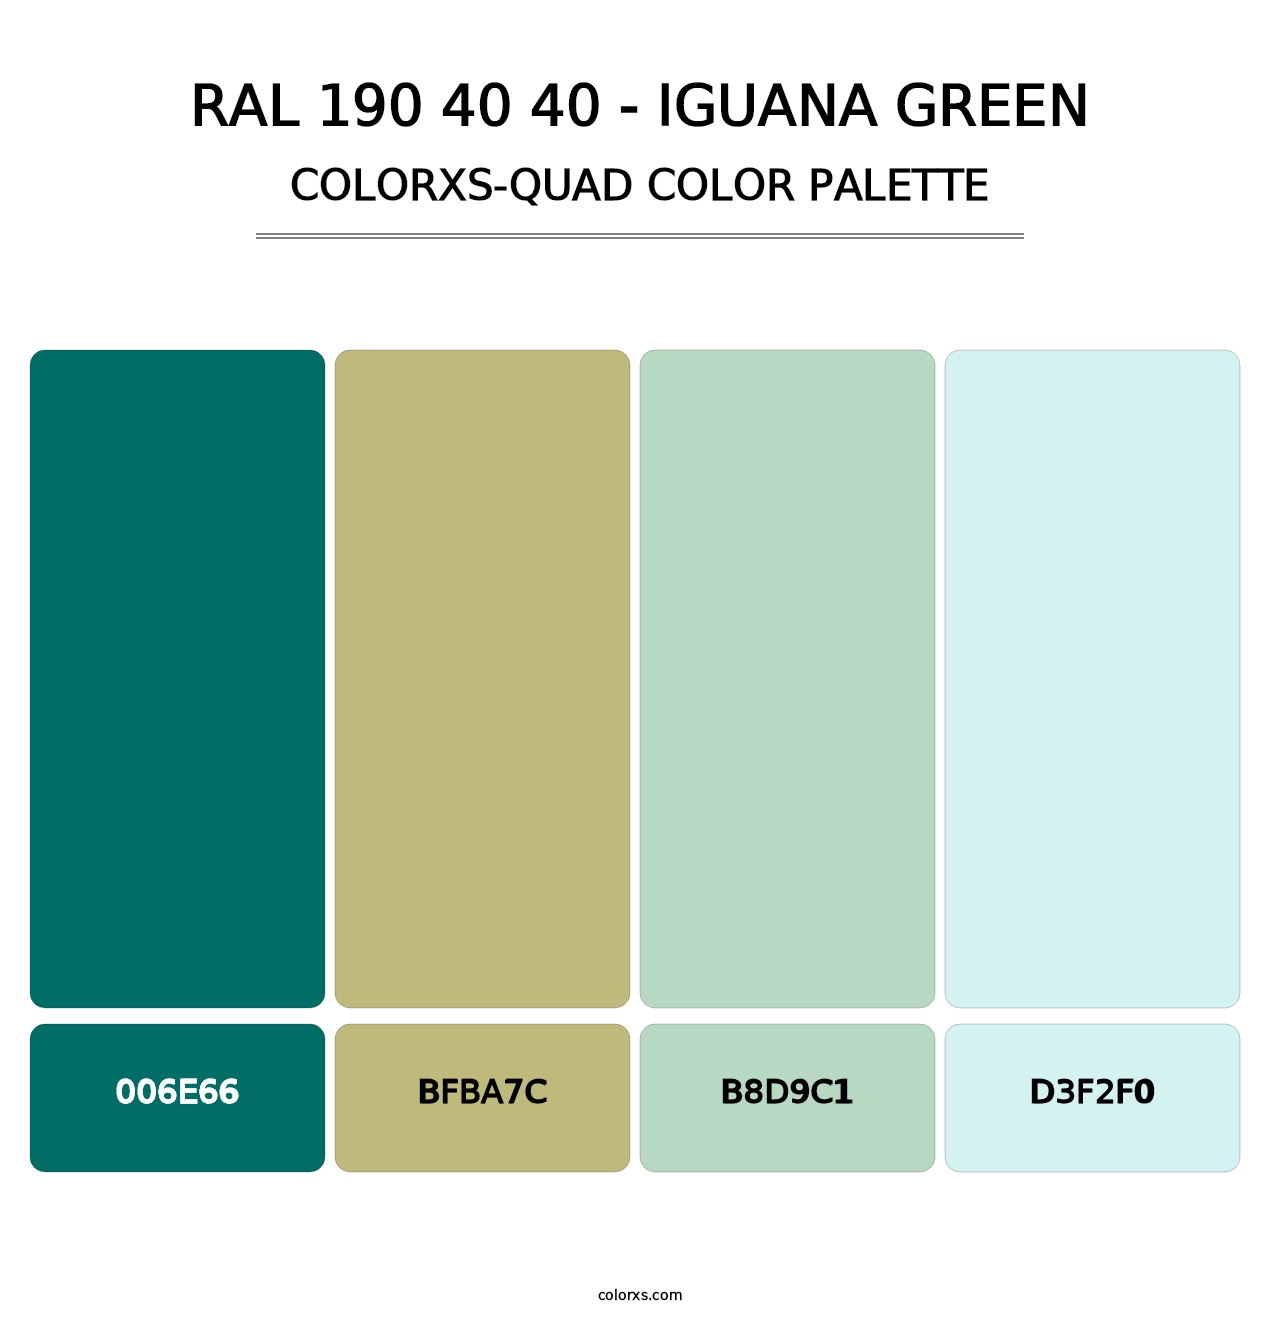 RAL 190 40 40 - Iguana Green - Colorxs Quad Palette